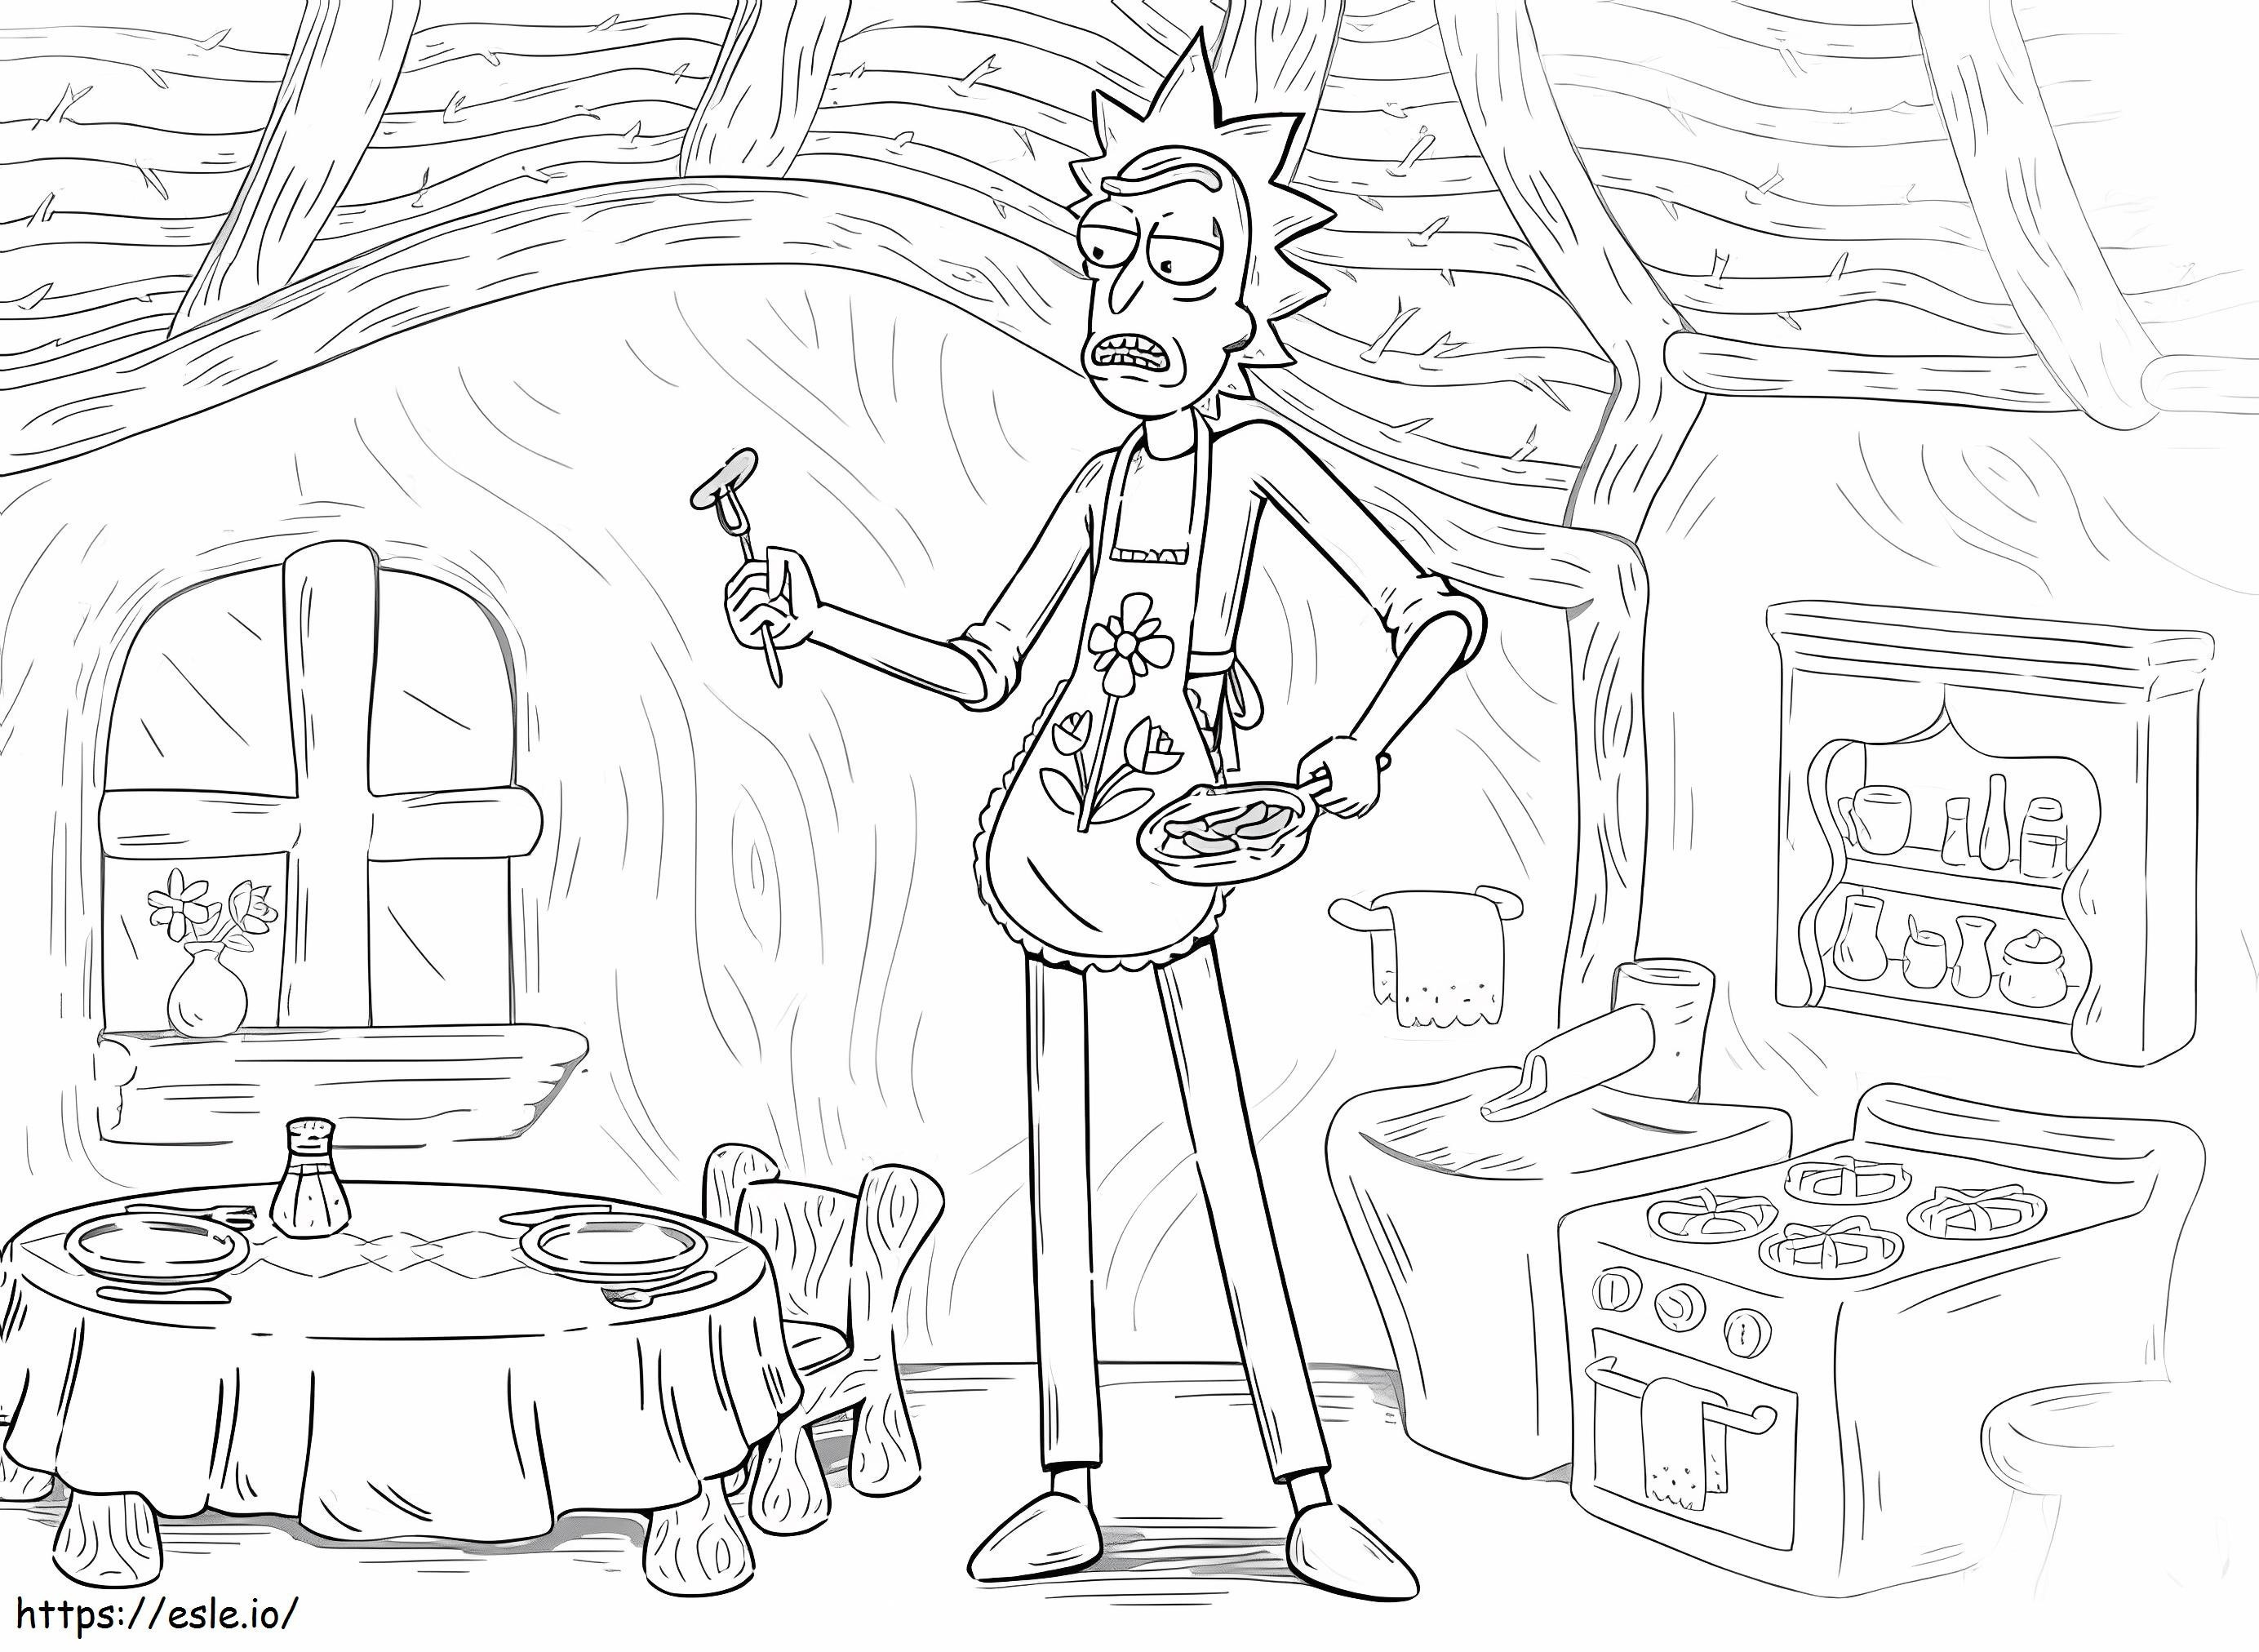 Rick na cozinha para colorir